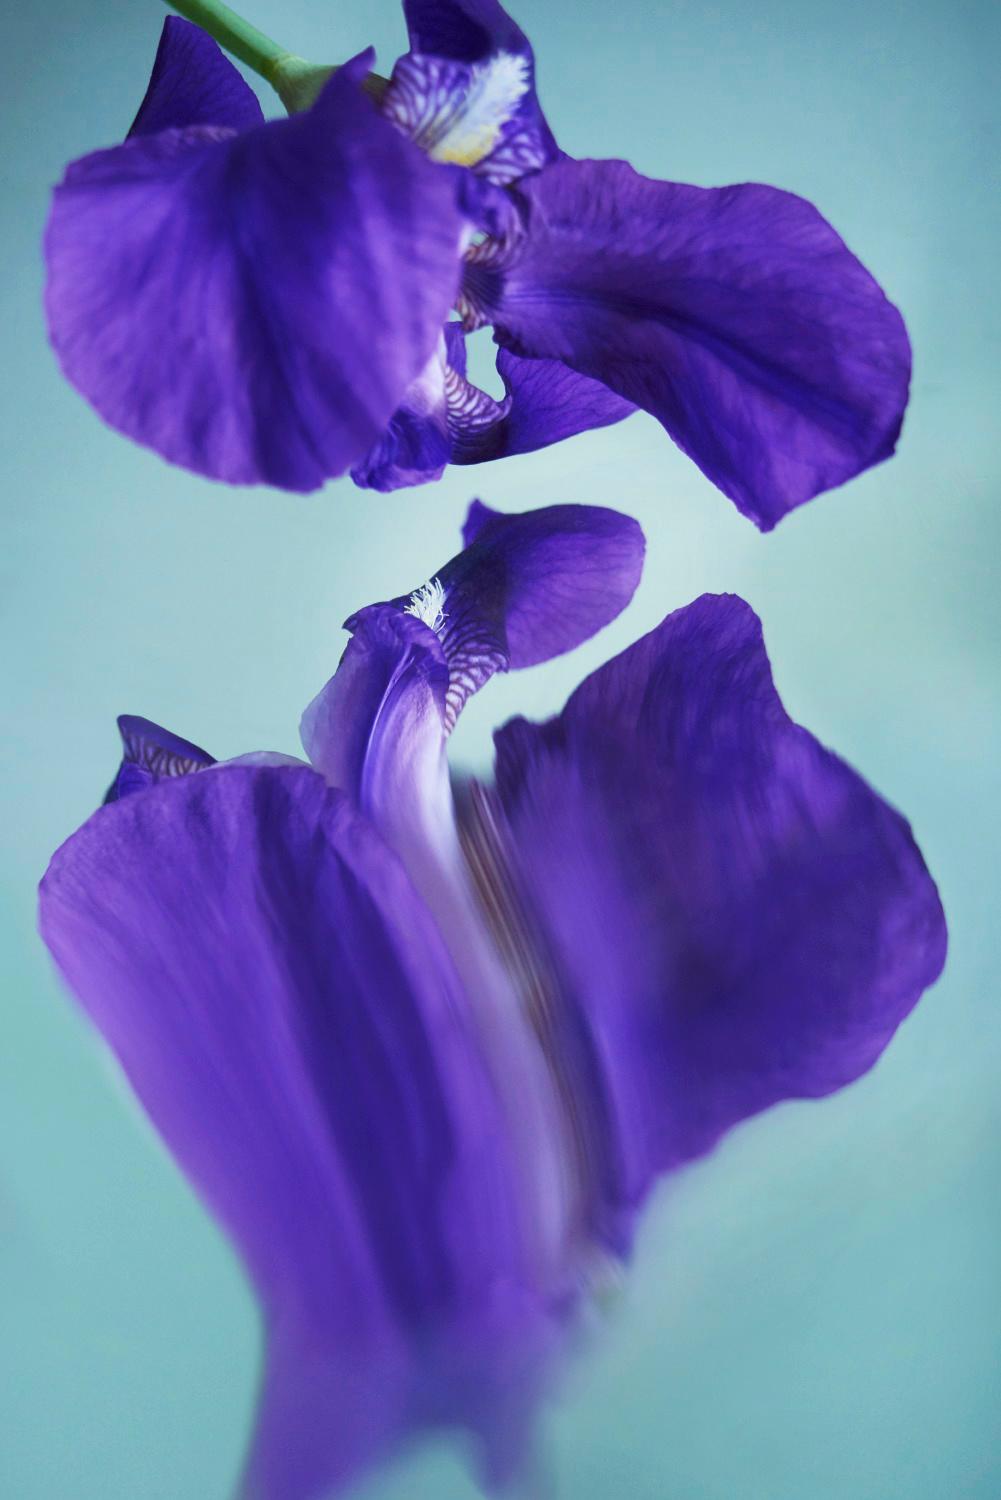 Flowers#07, flowers, purple, water